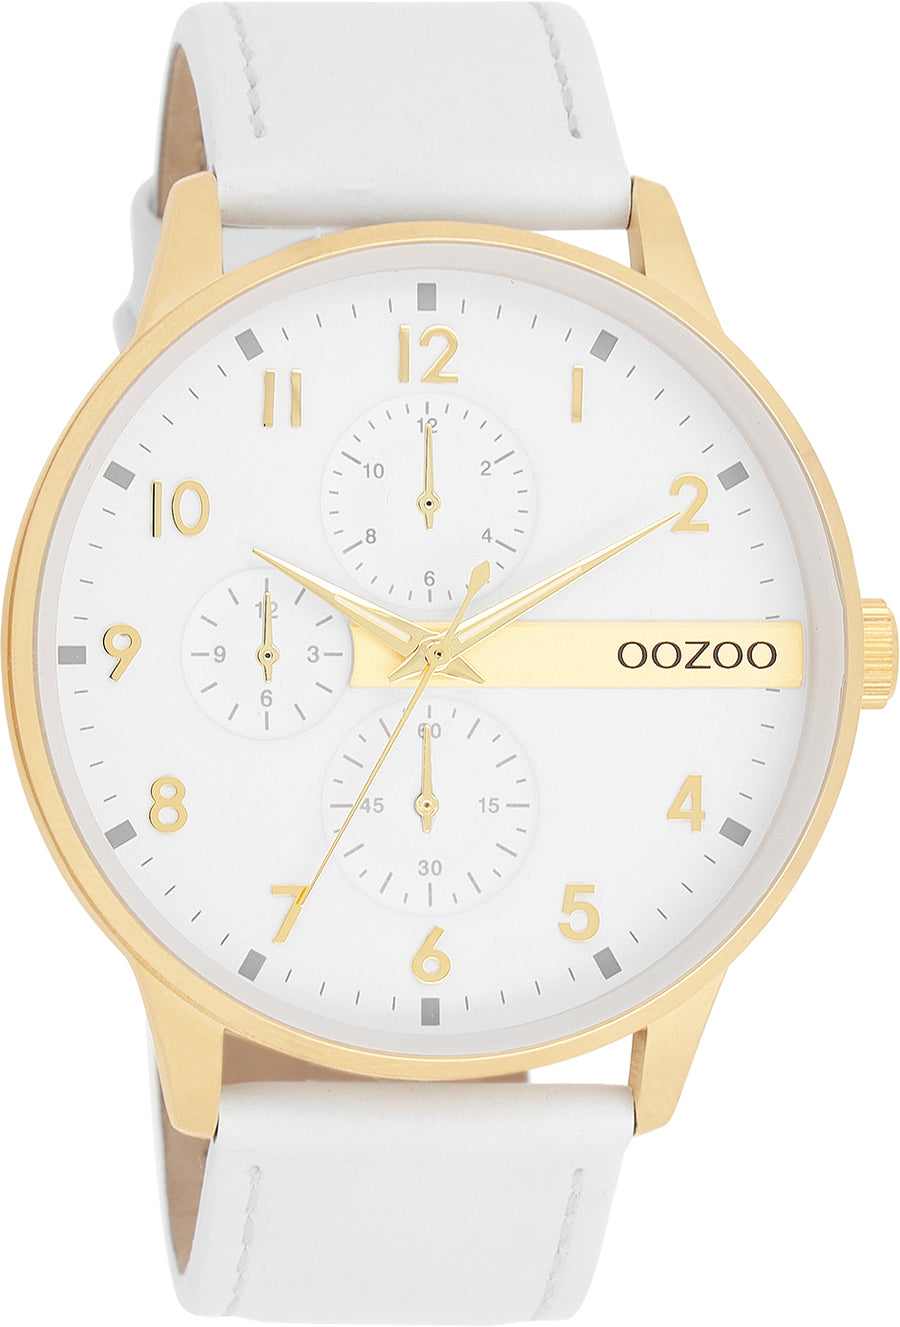 Oozoo Timepieces C11305 Herrenuhr